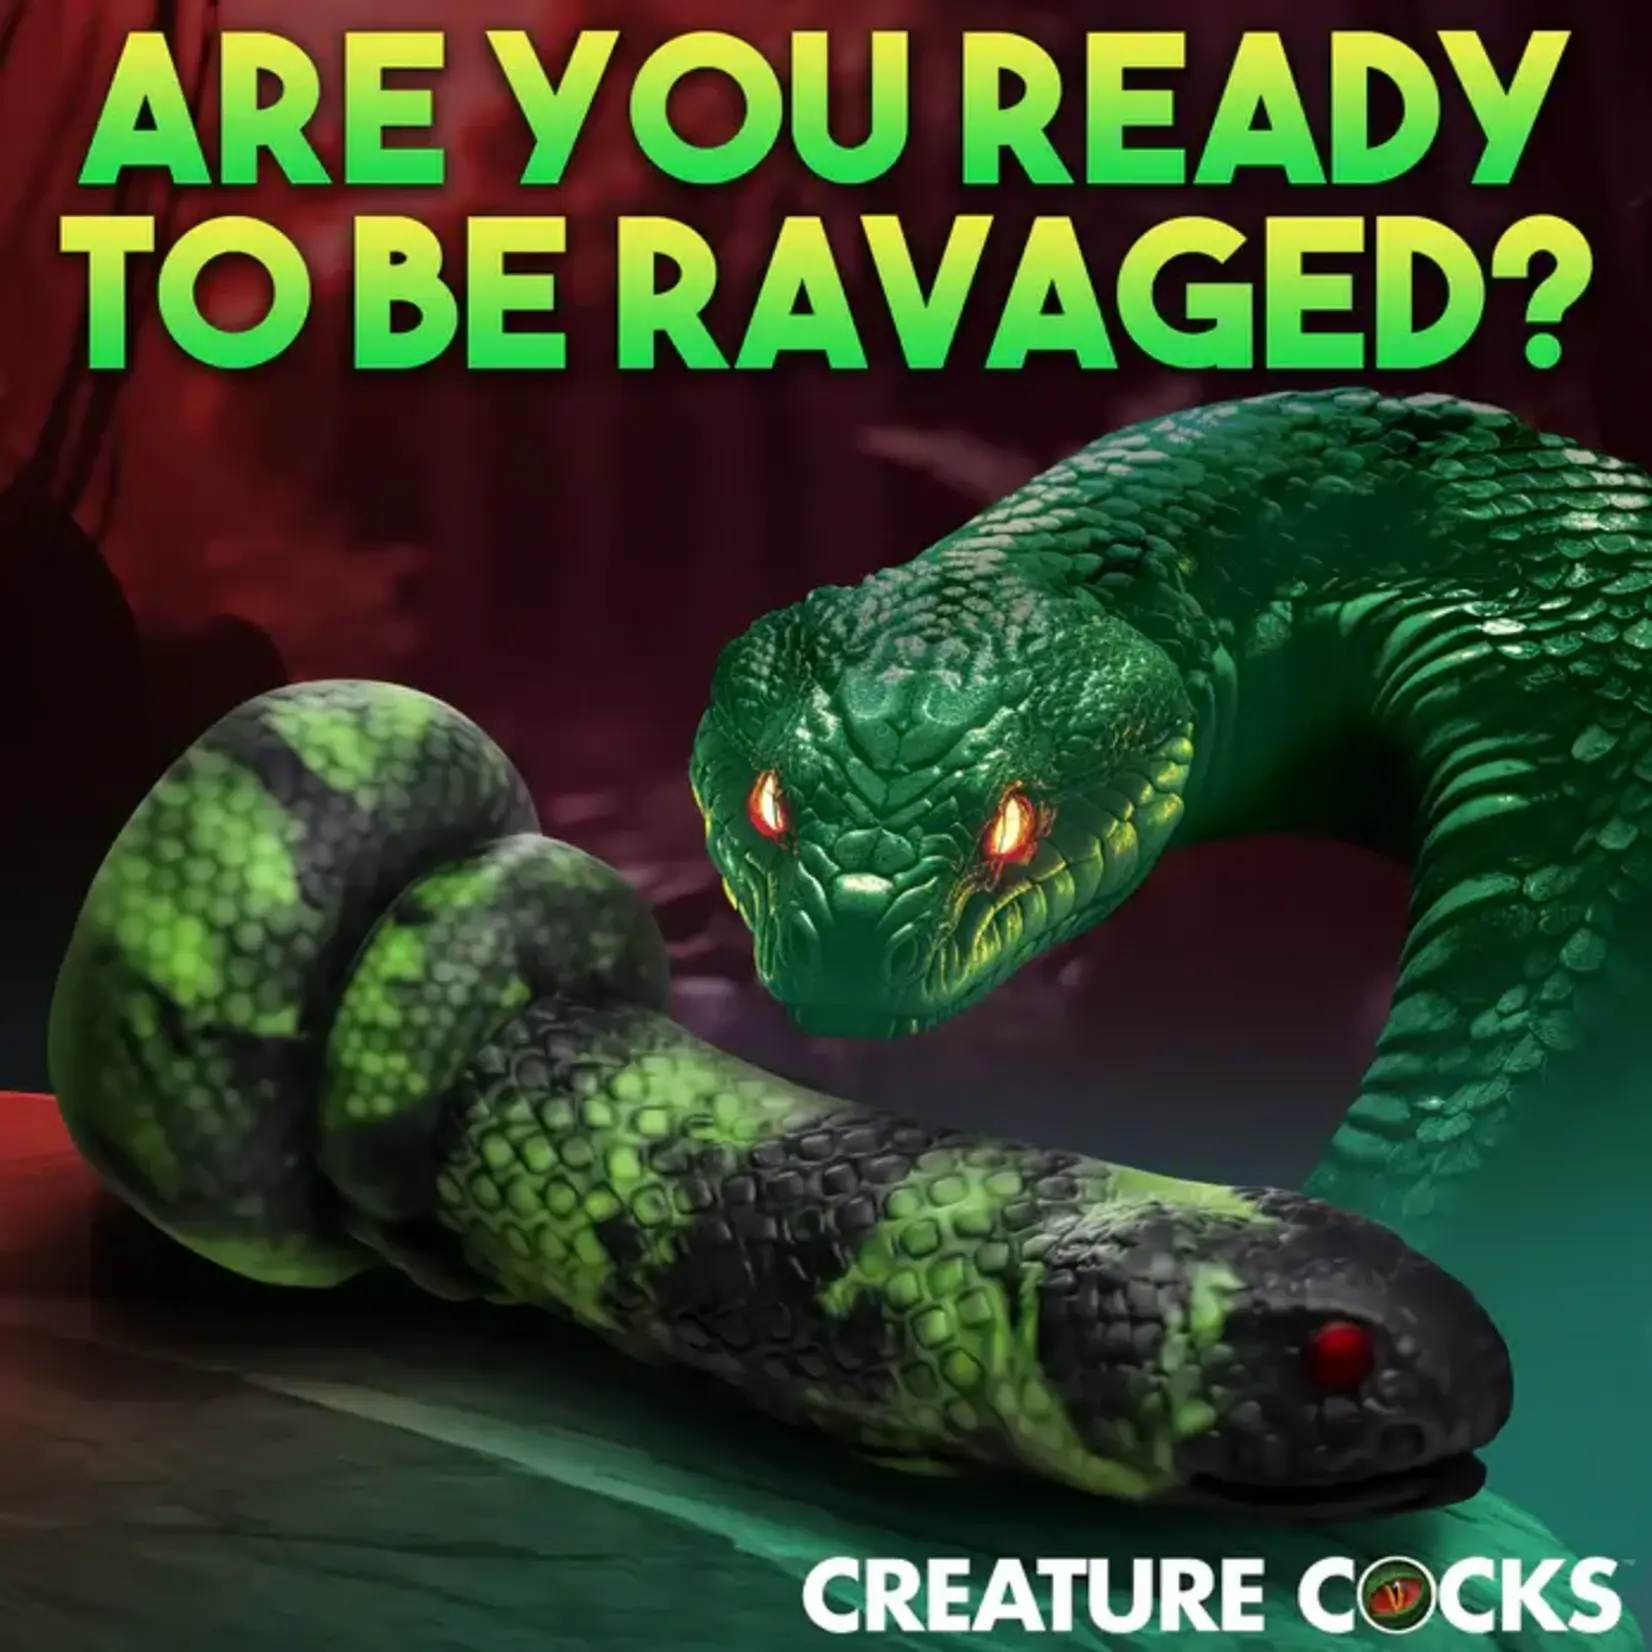 Creature Cocks Python Silicone Dildo - Green/Black/Red